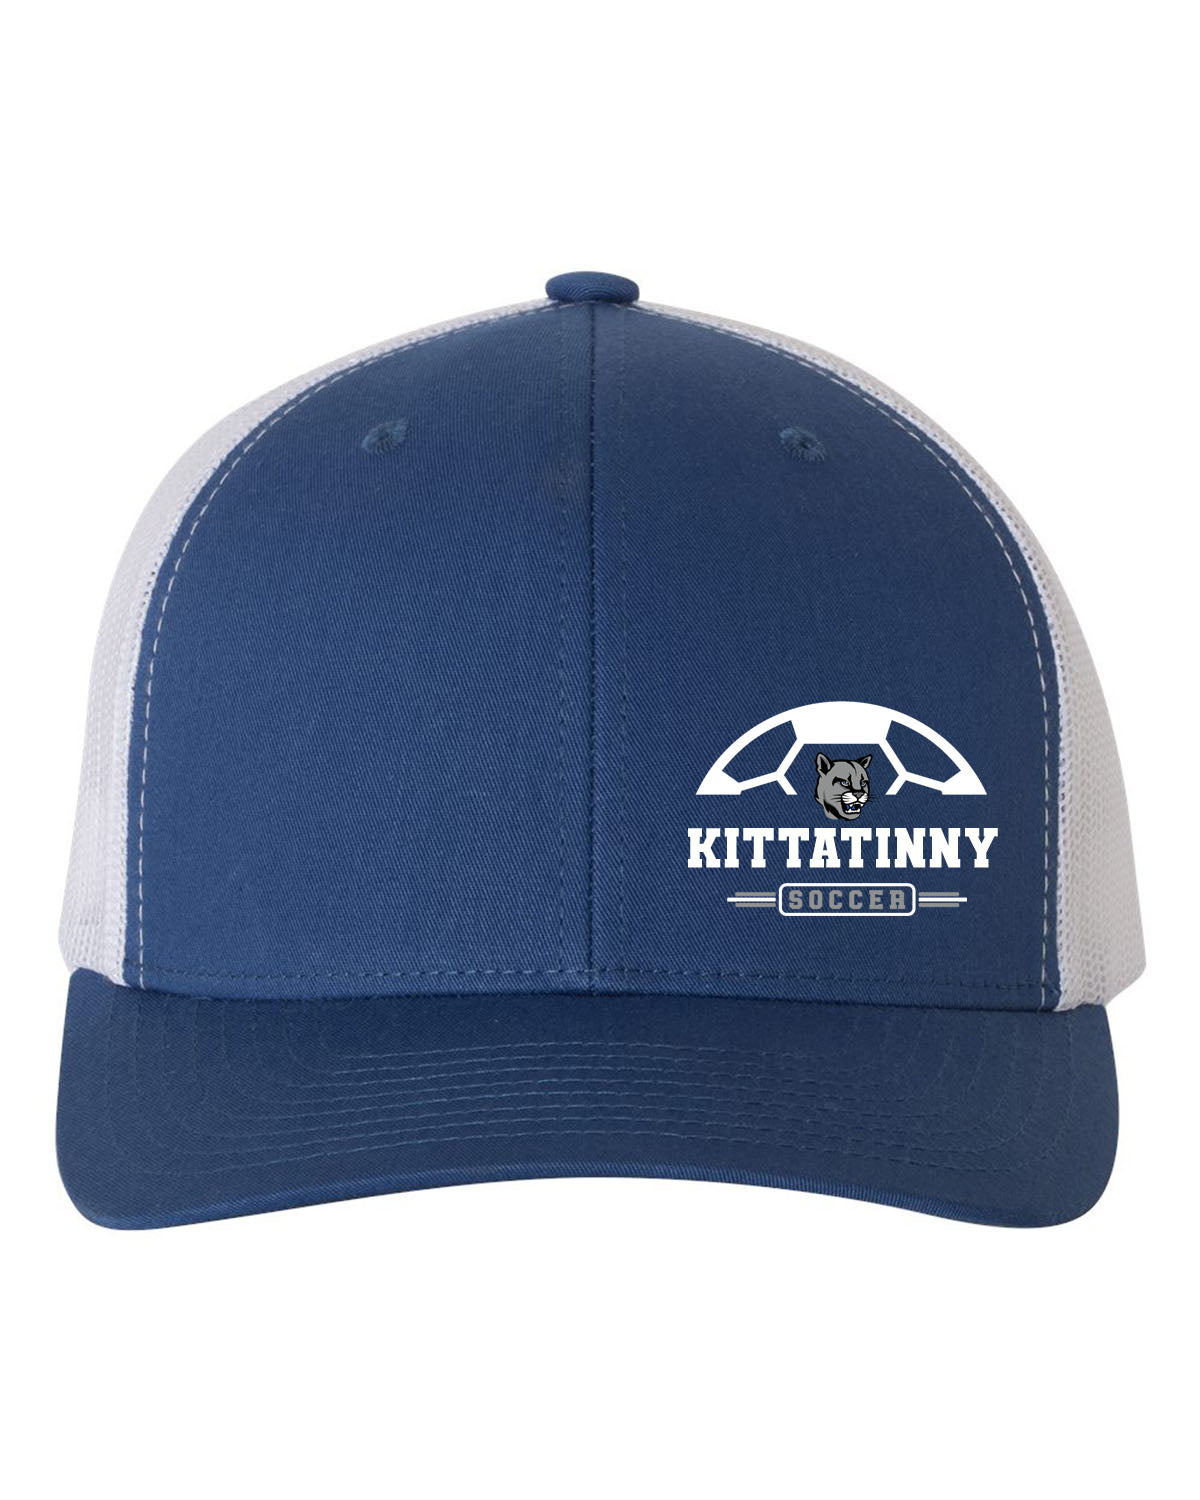 Kittatinny Soccer design 2 Trucker Hat